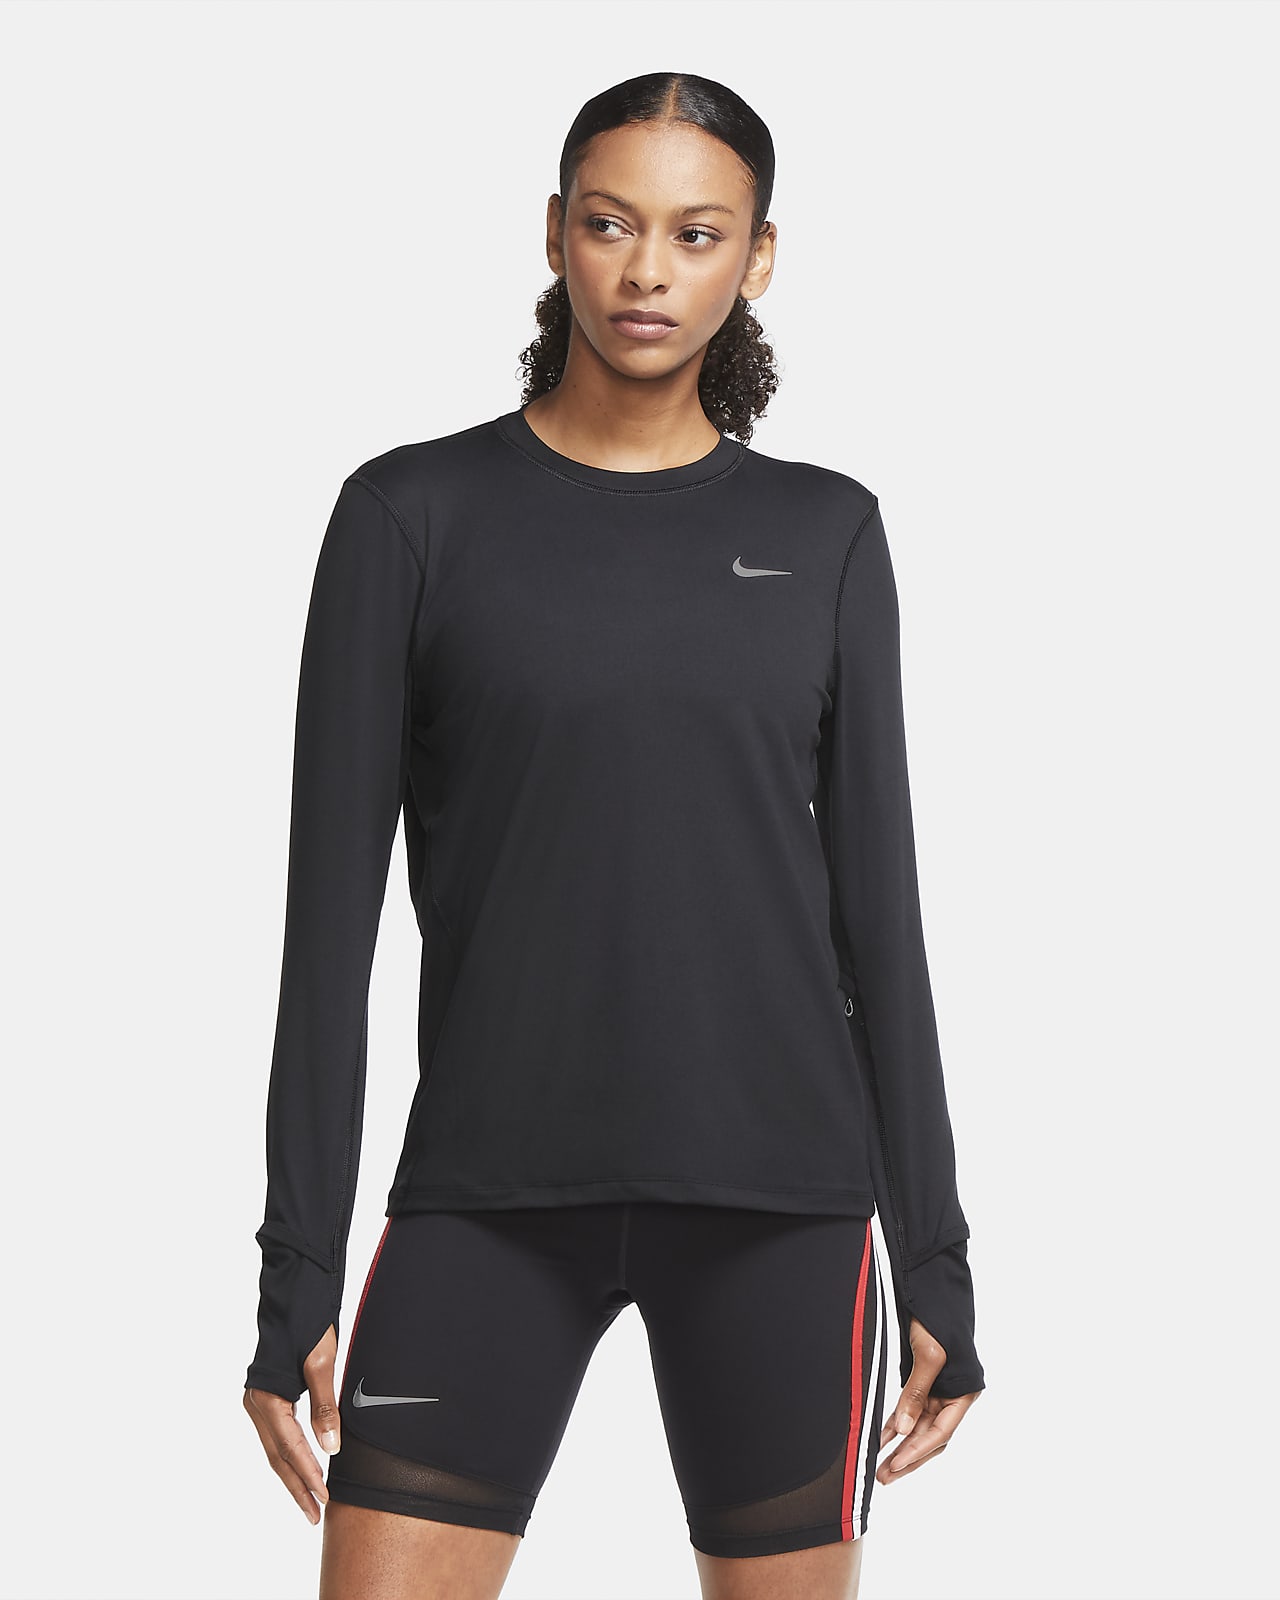 Nike Dri-FIT Element Women's Running Crew